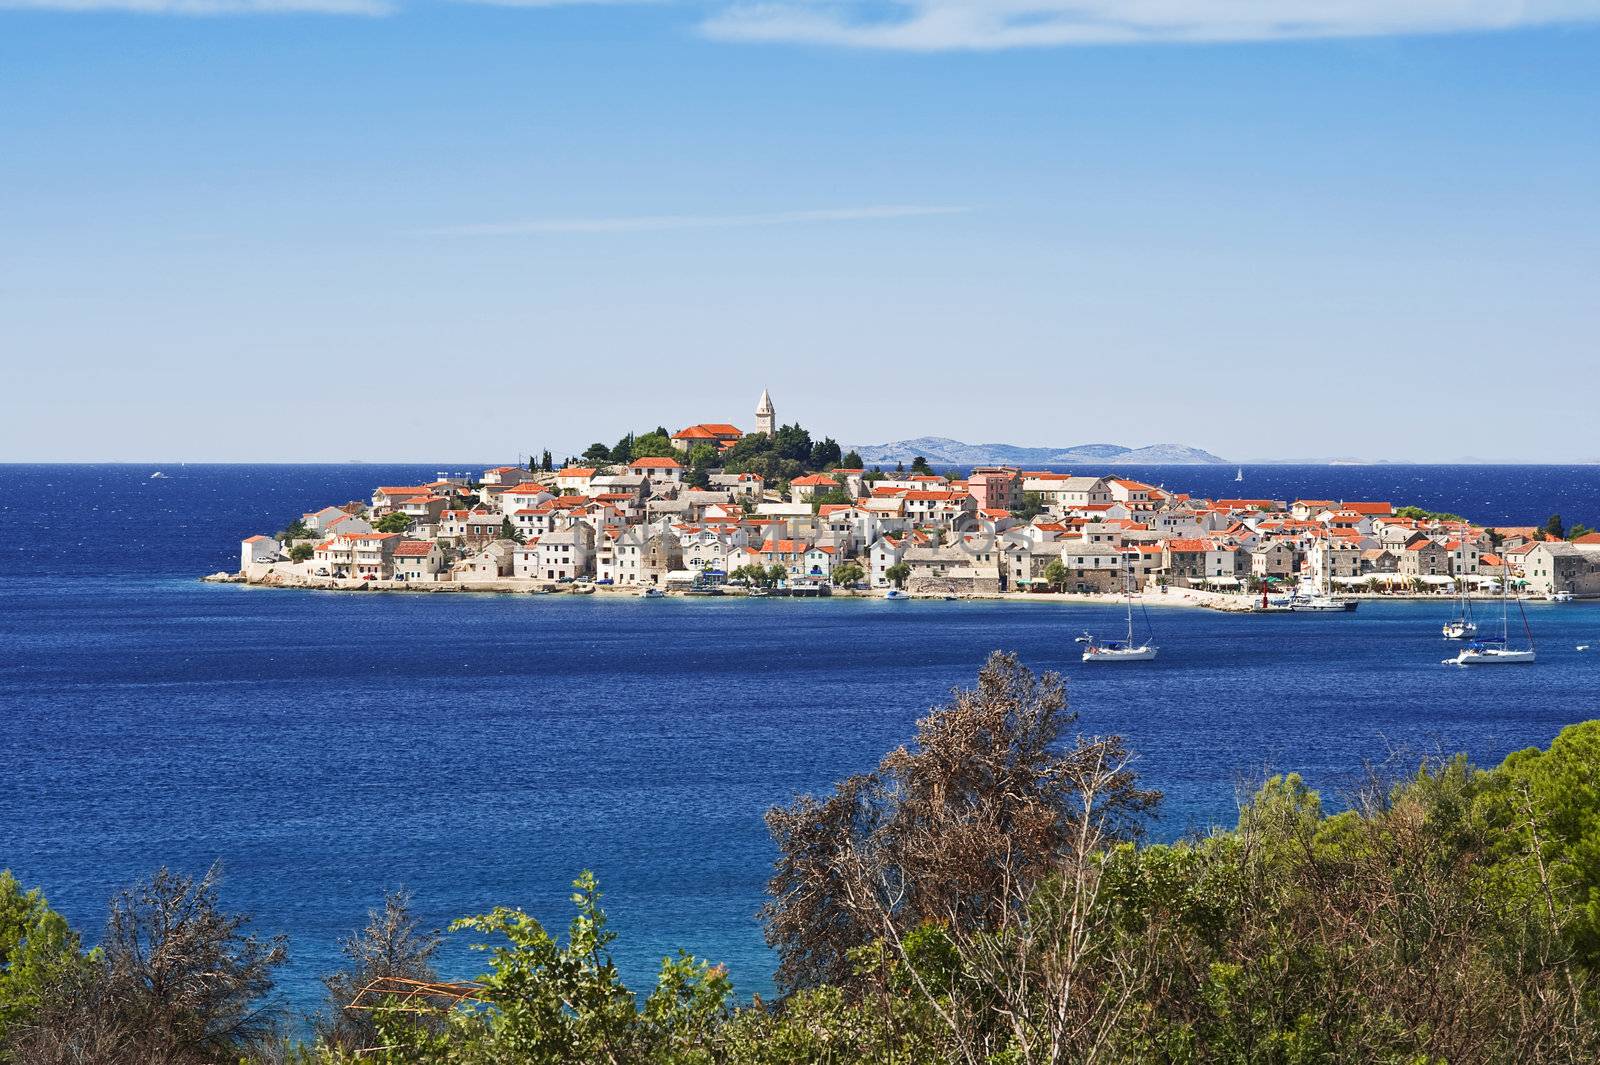 view of primosten town in croatia, europe